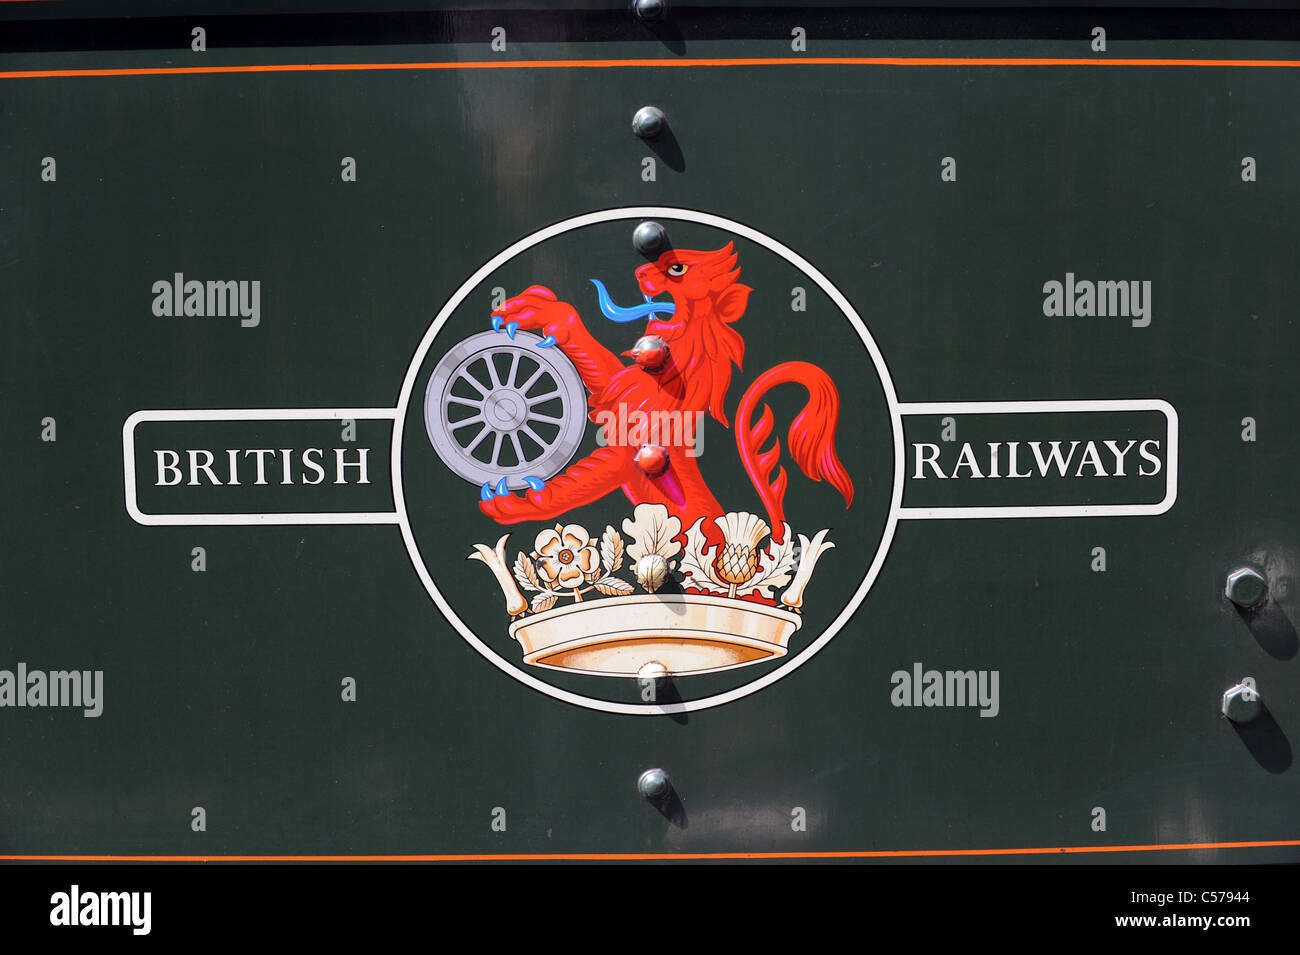 The British Railways sign and logo on old steam locomotive Stock Photo